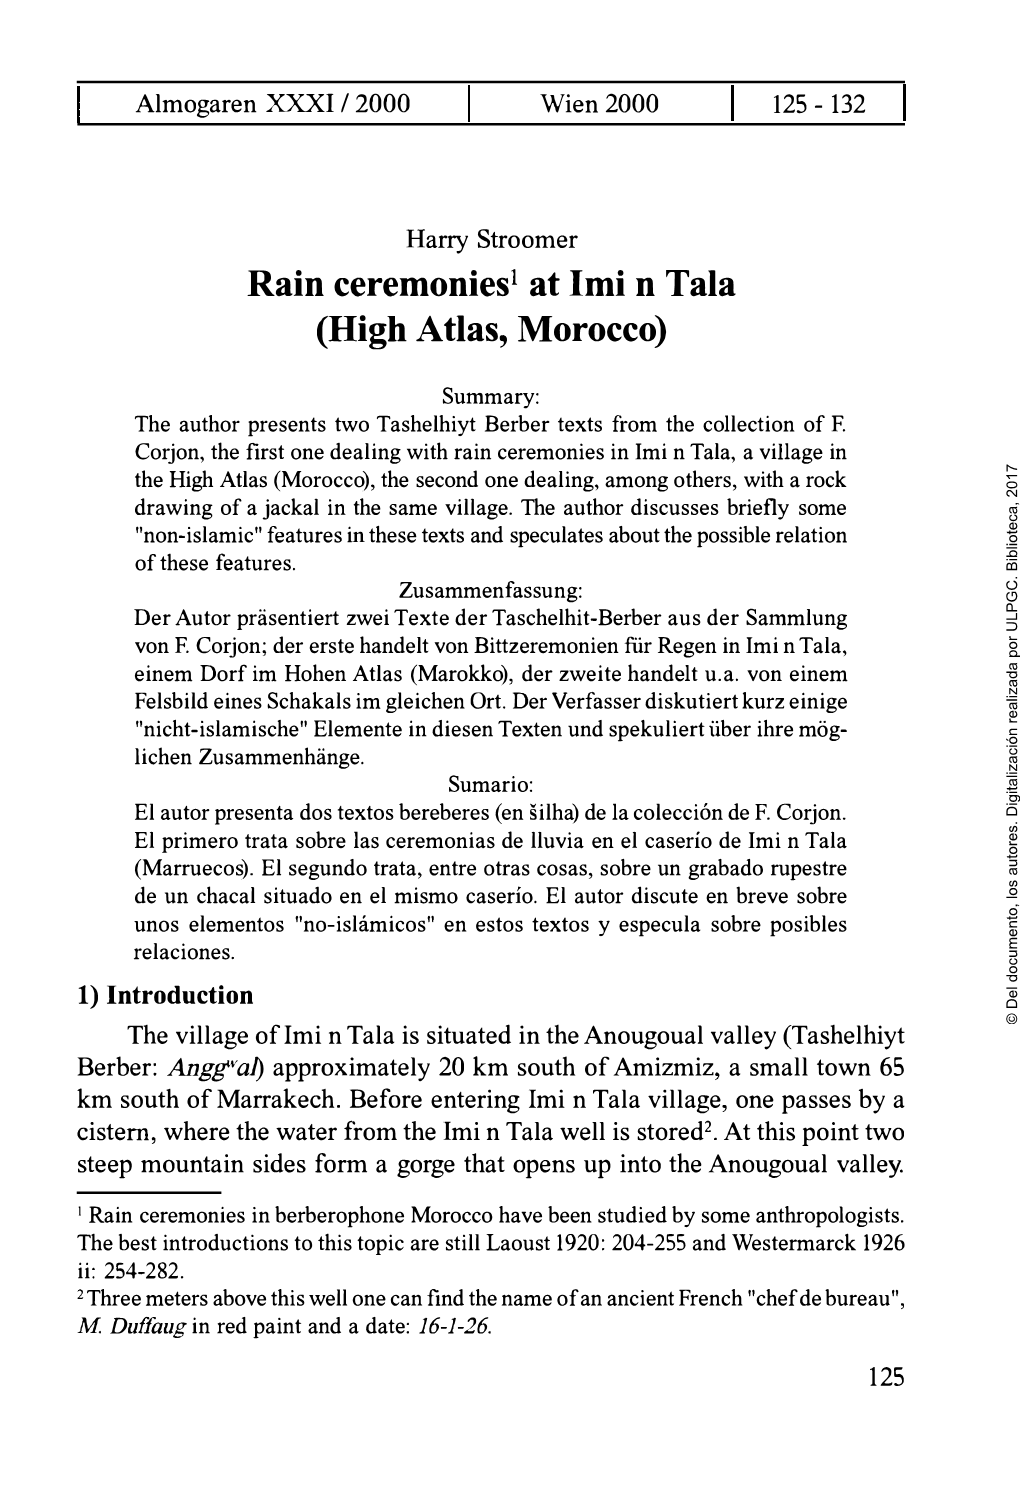 Rain Ceremonies at Imi N Tala (High Atlas, Morocco)